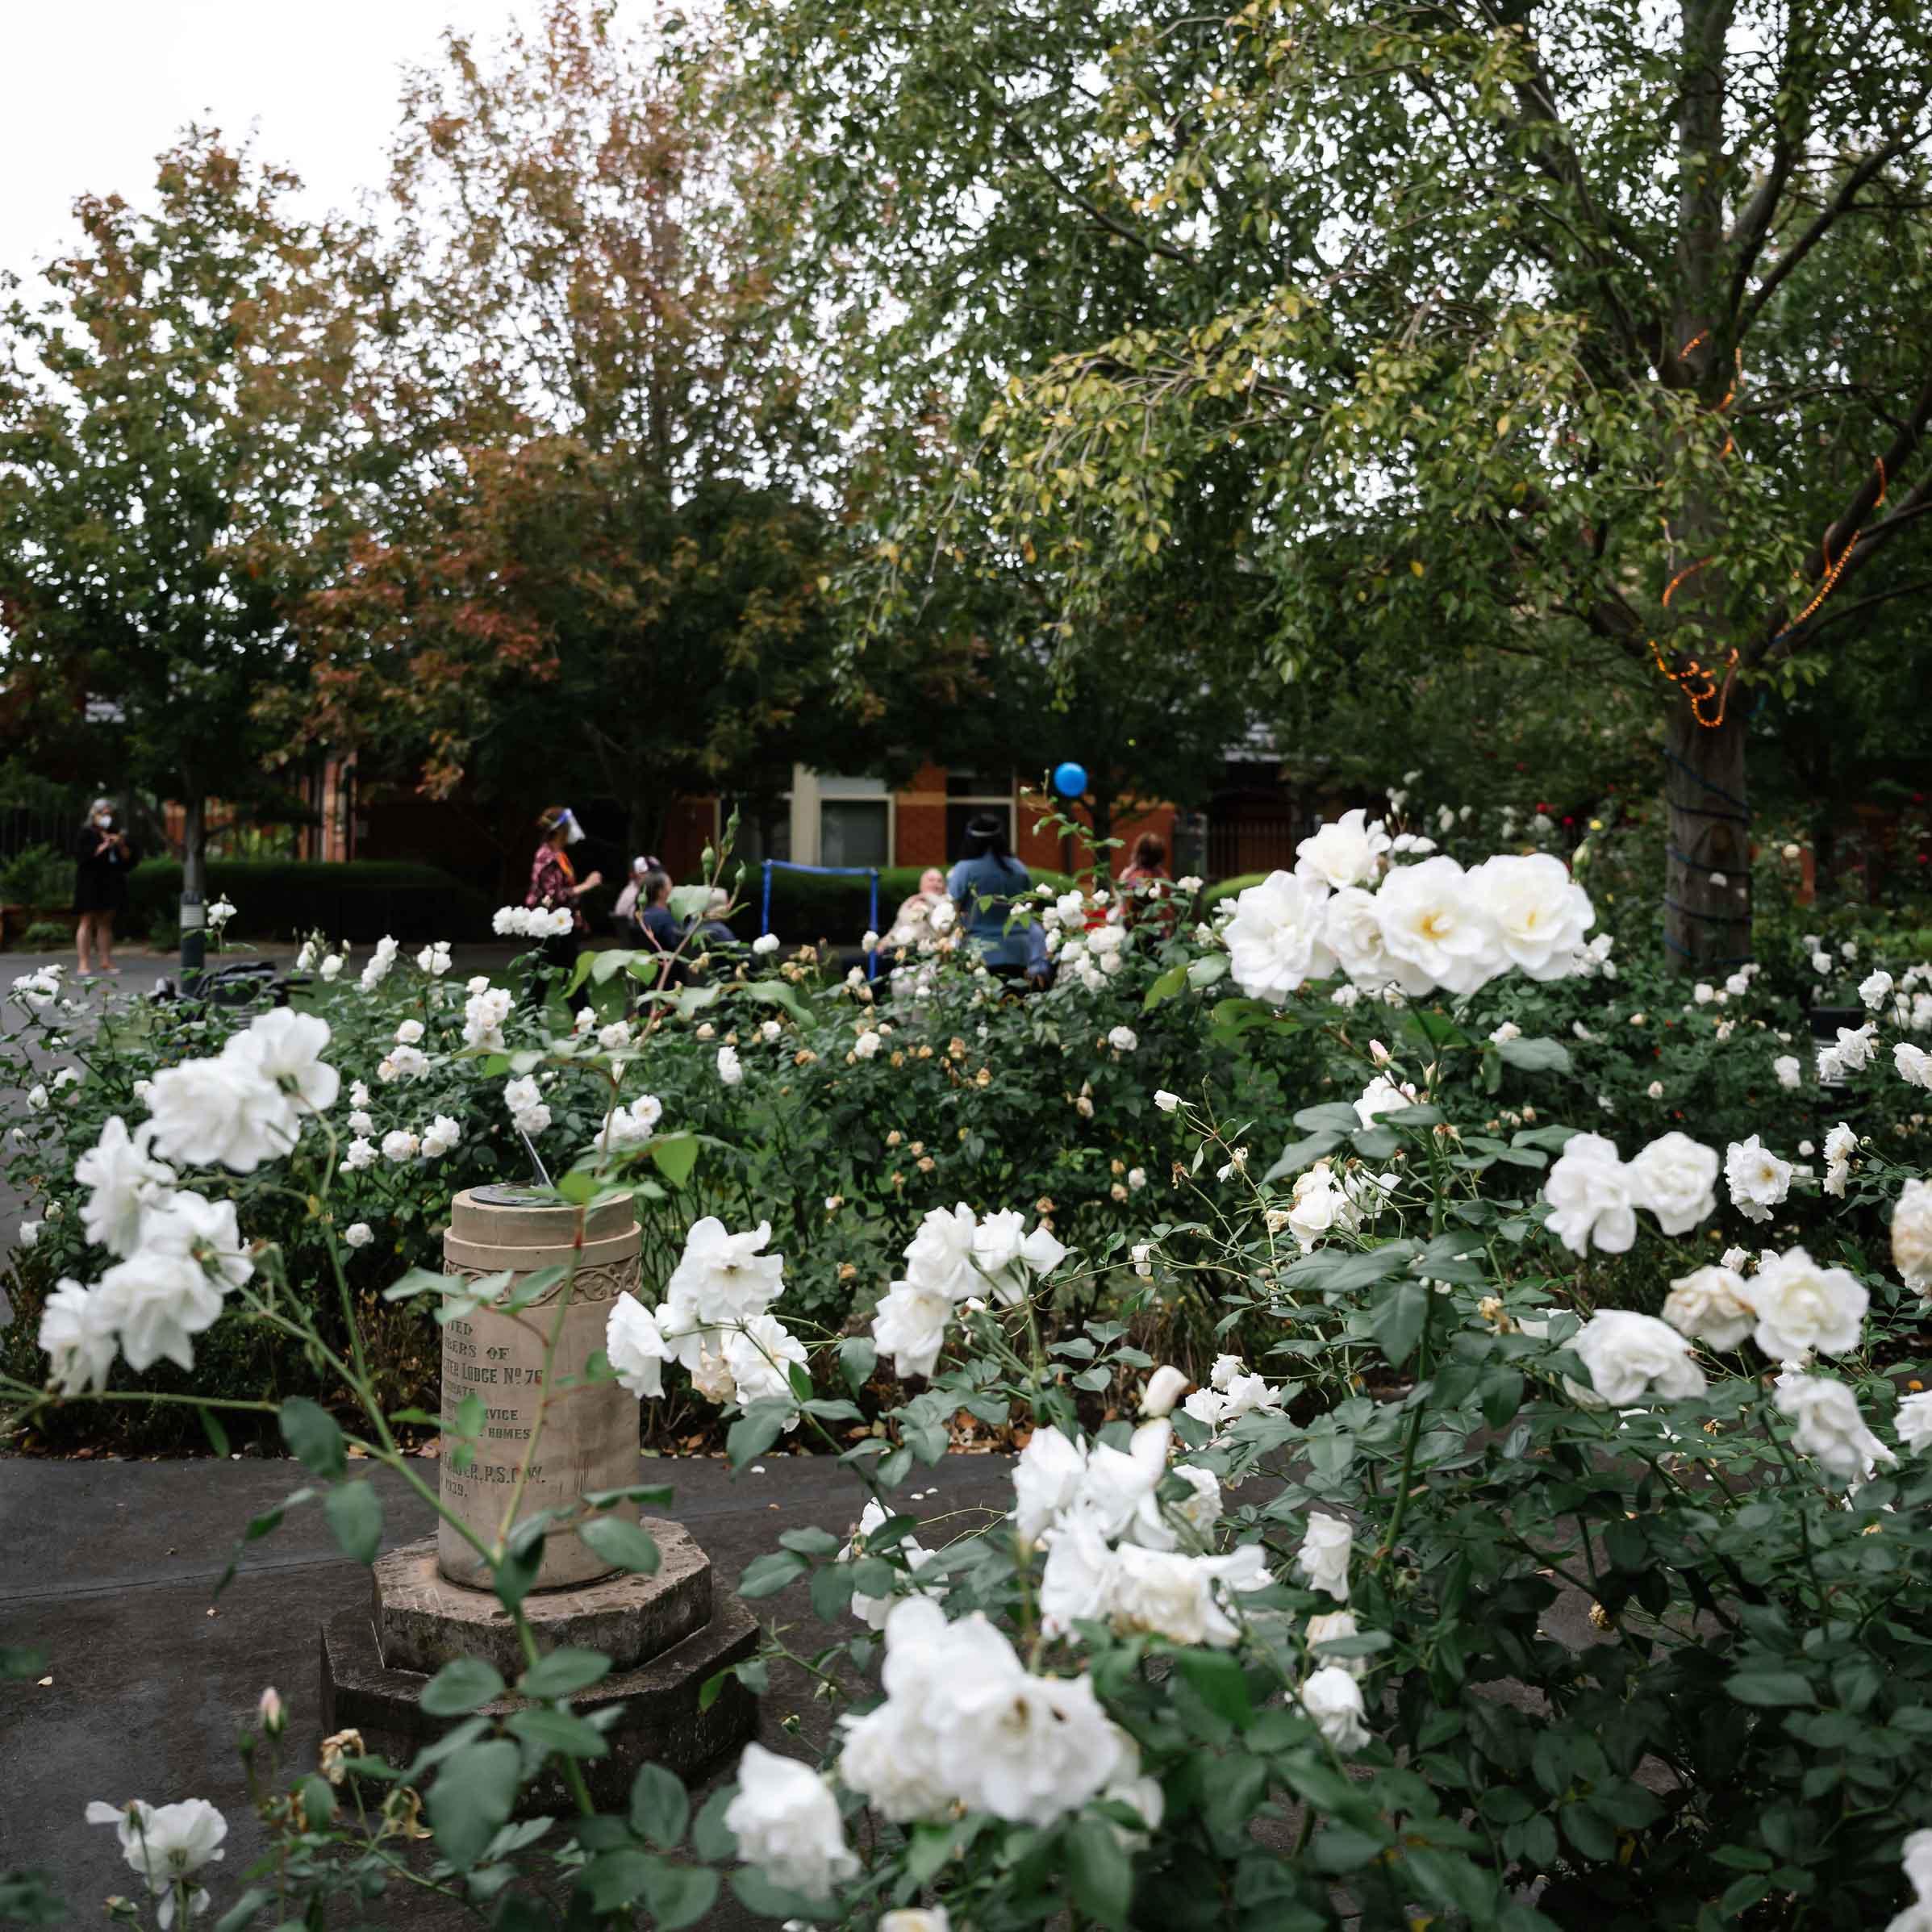 White roses in a retirement village garden.